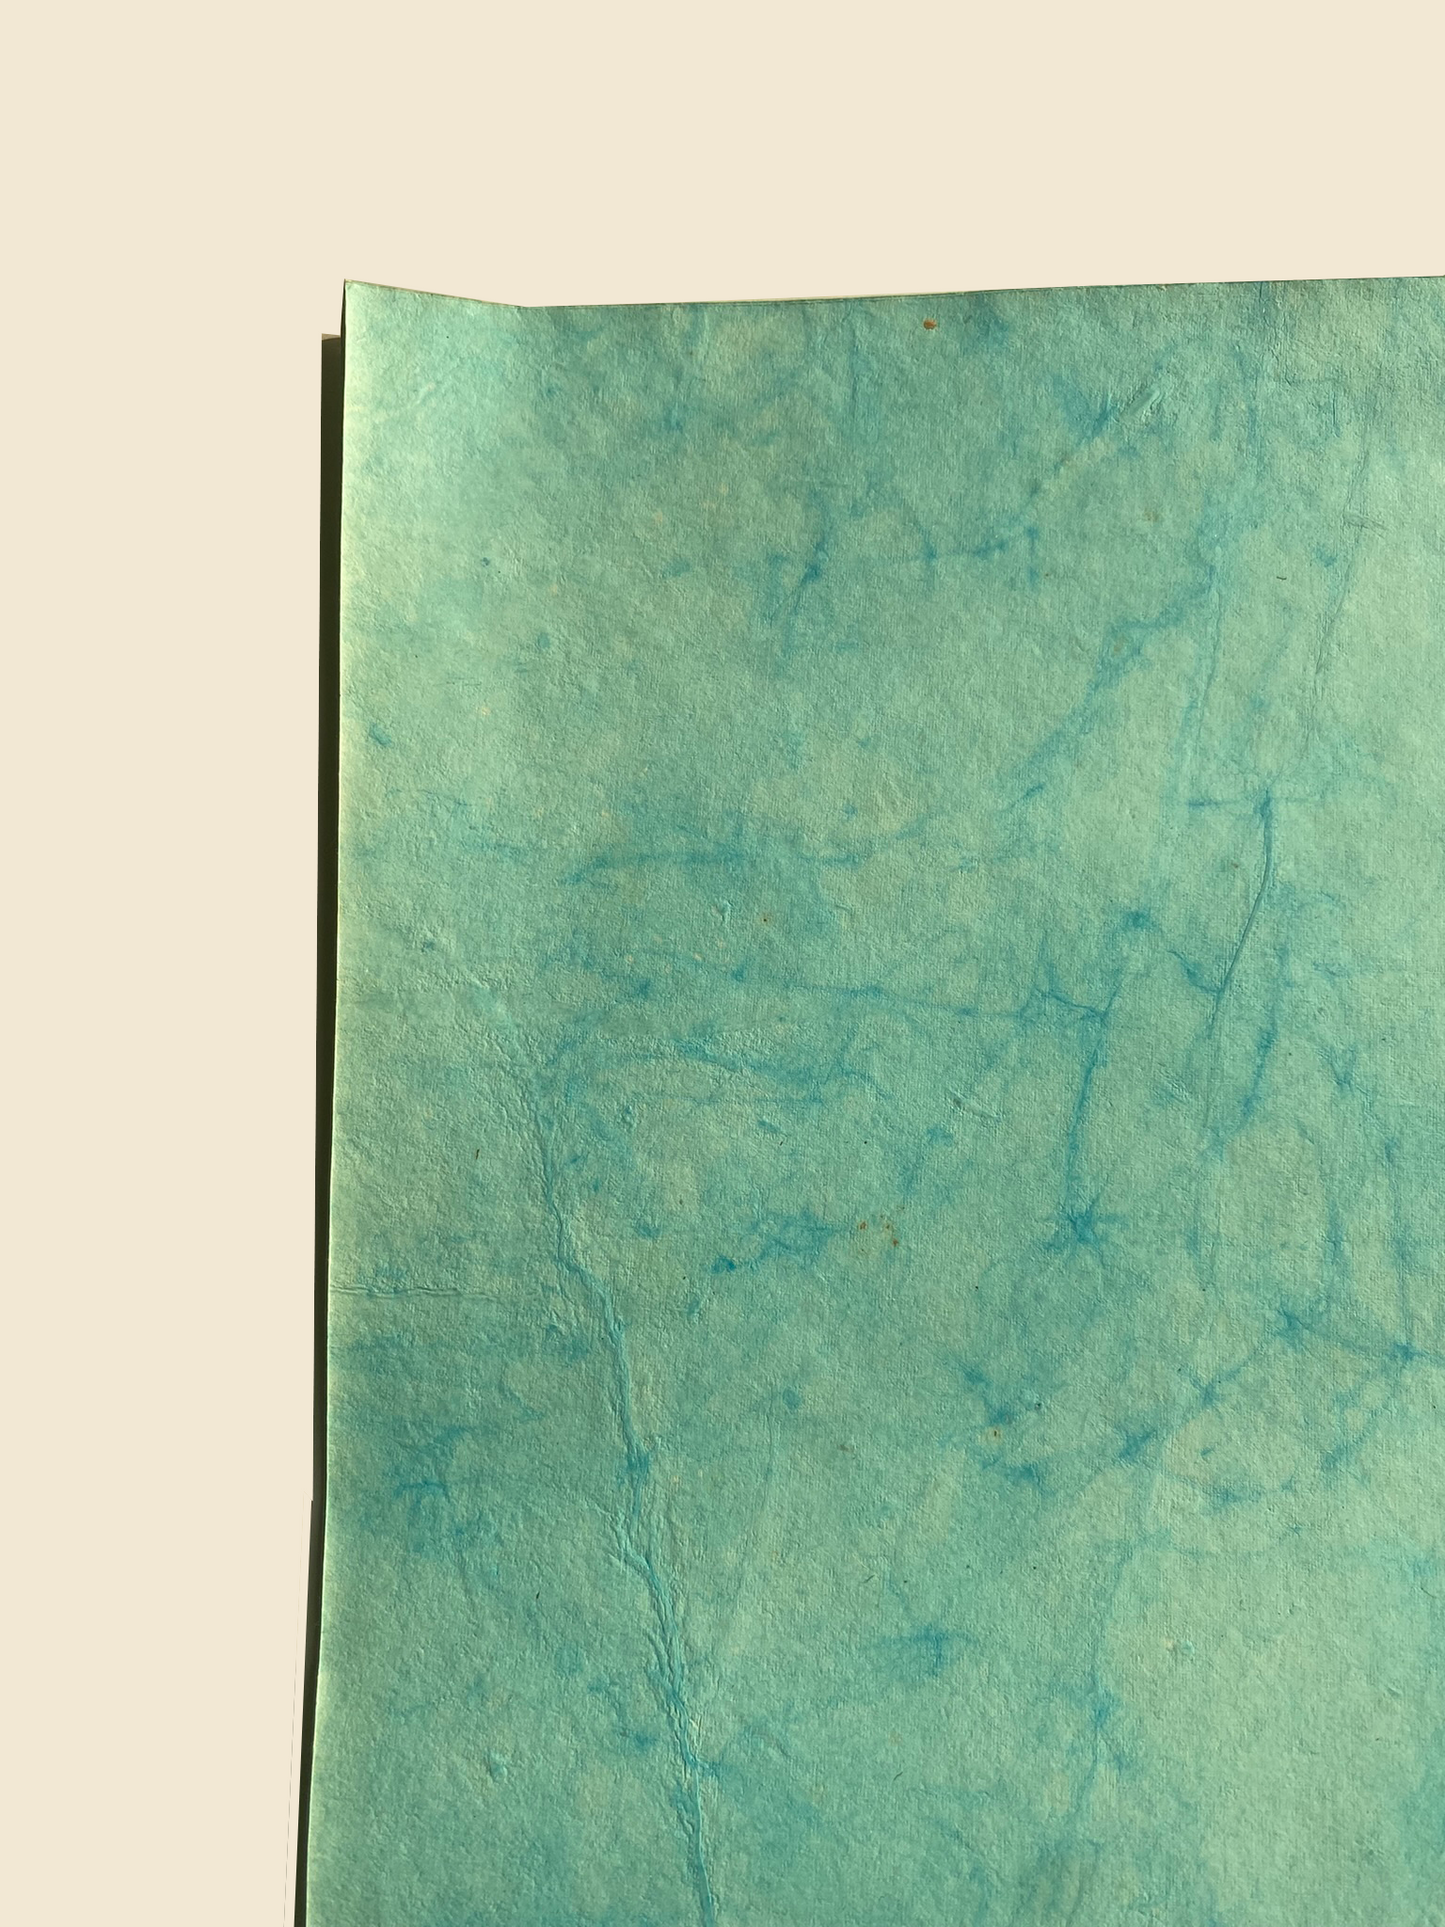 Blue Pattern Paper